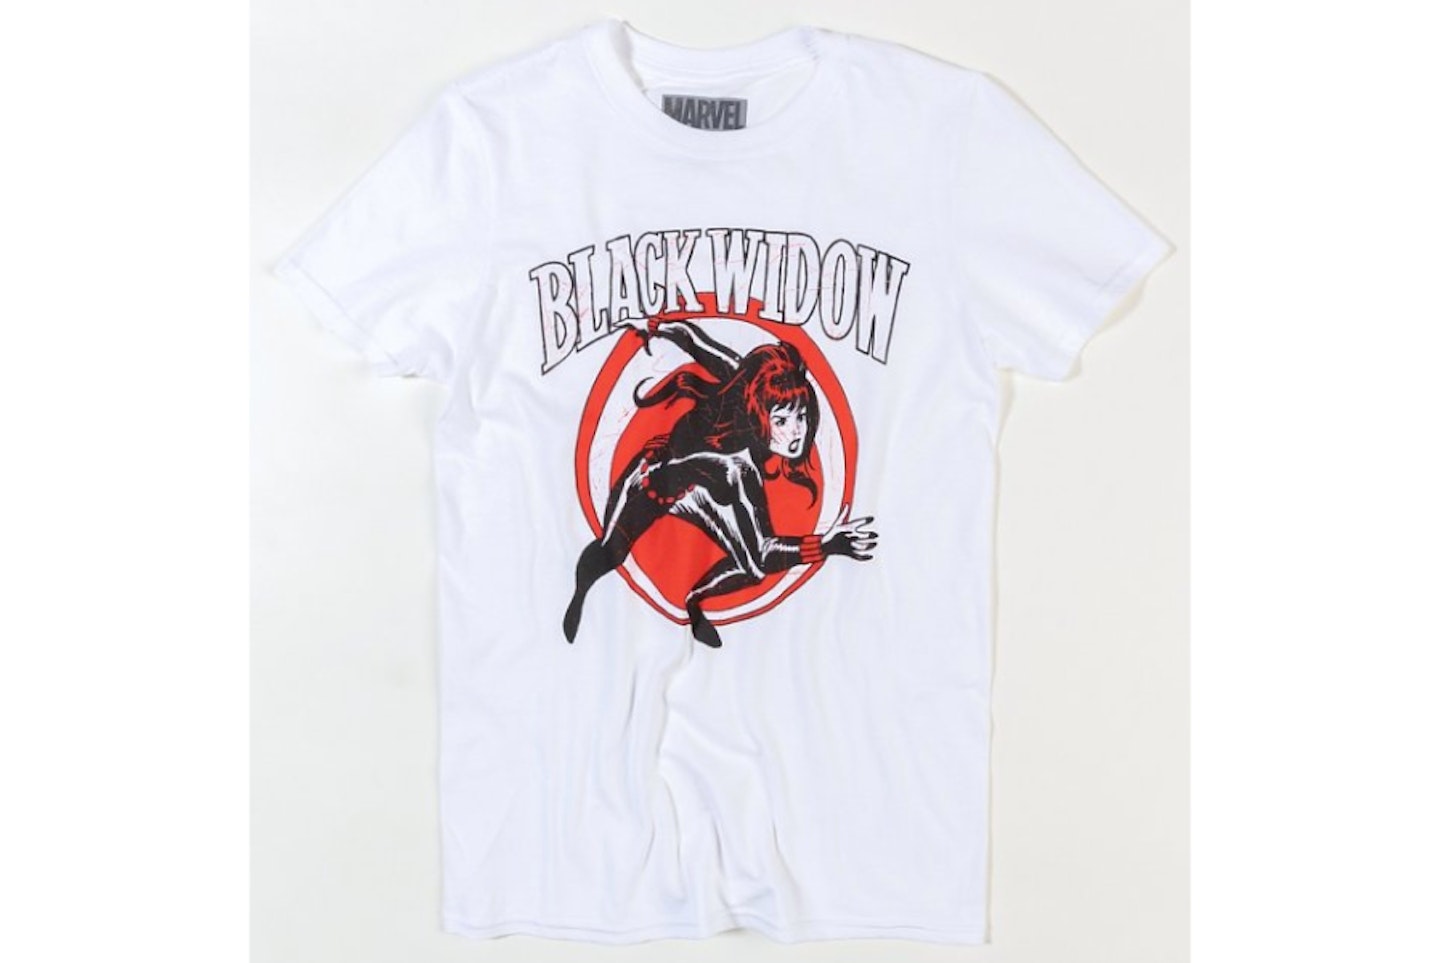 White Vintage Black Widow T-Shirt, £9.99